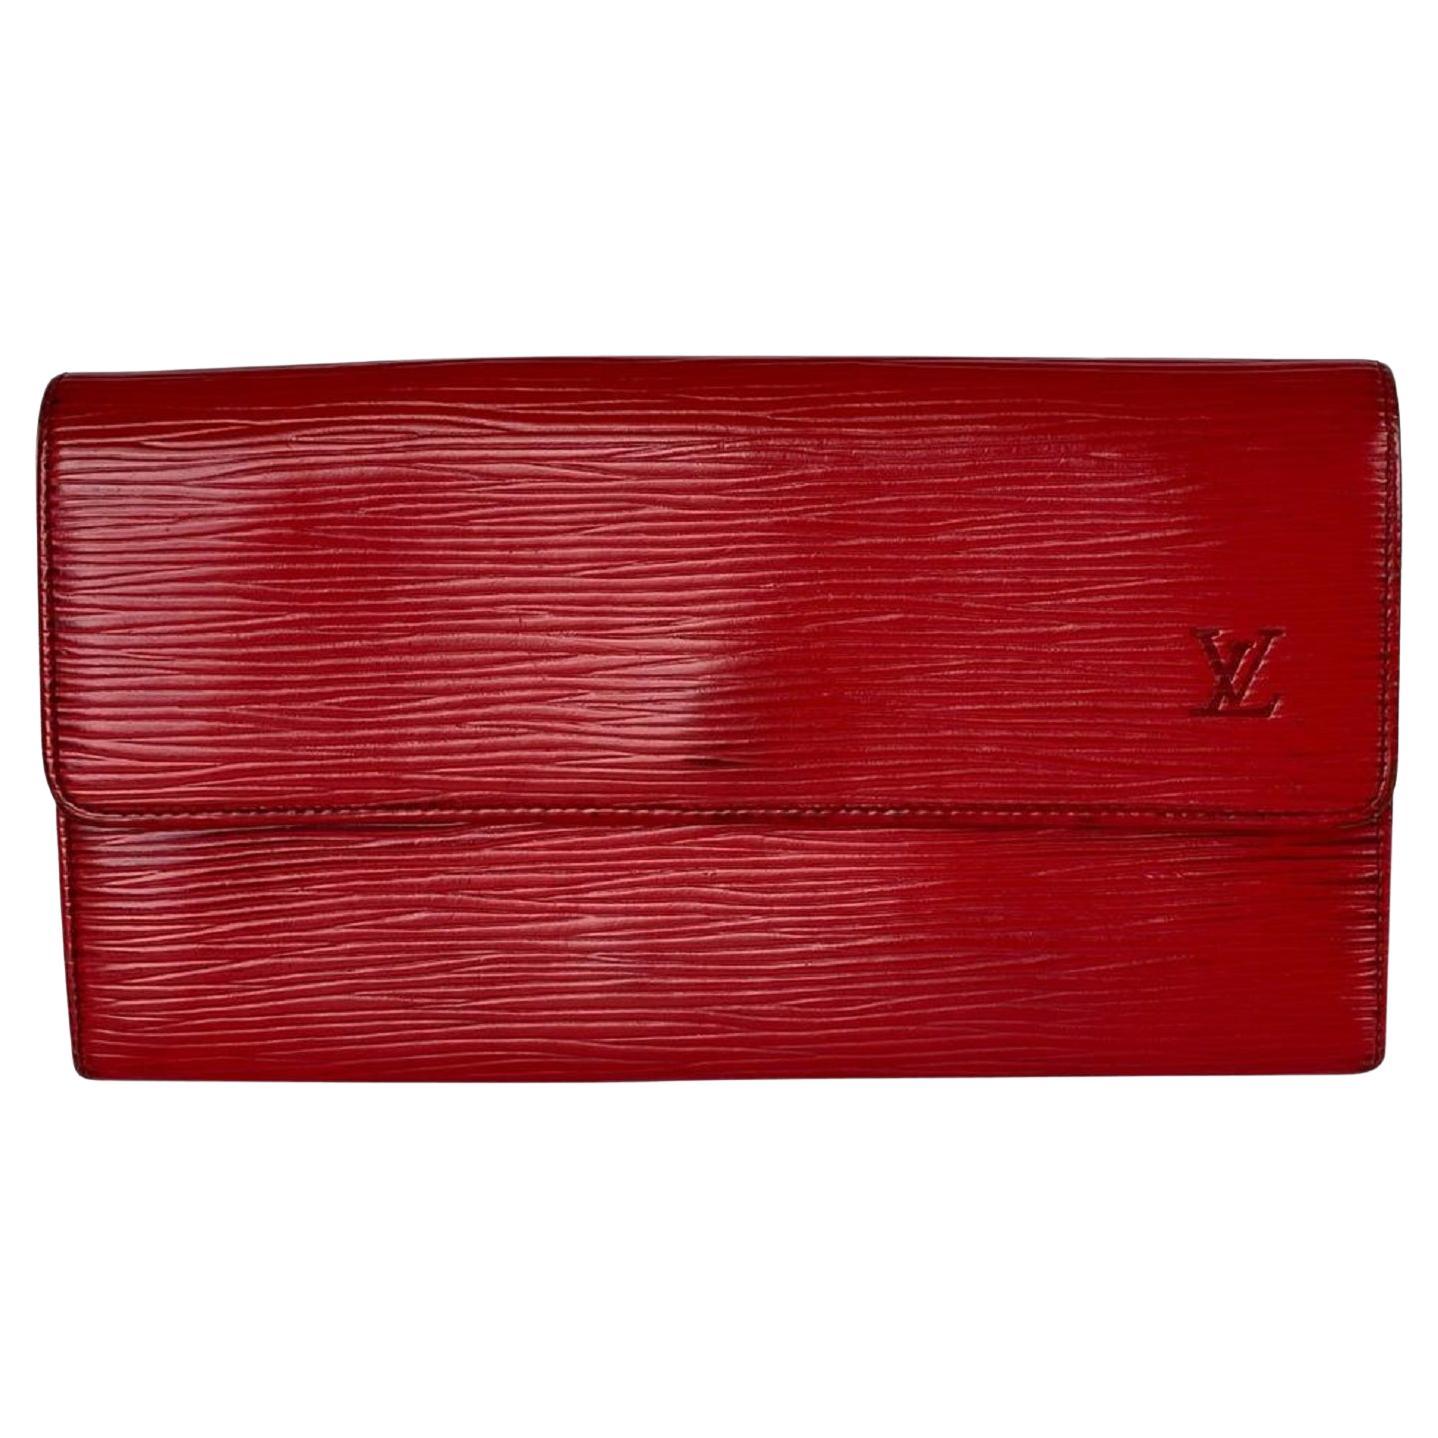 Louis Vuitton Red Epi Leather Sarah Long Wallet 7lav60 For Sale